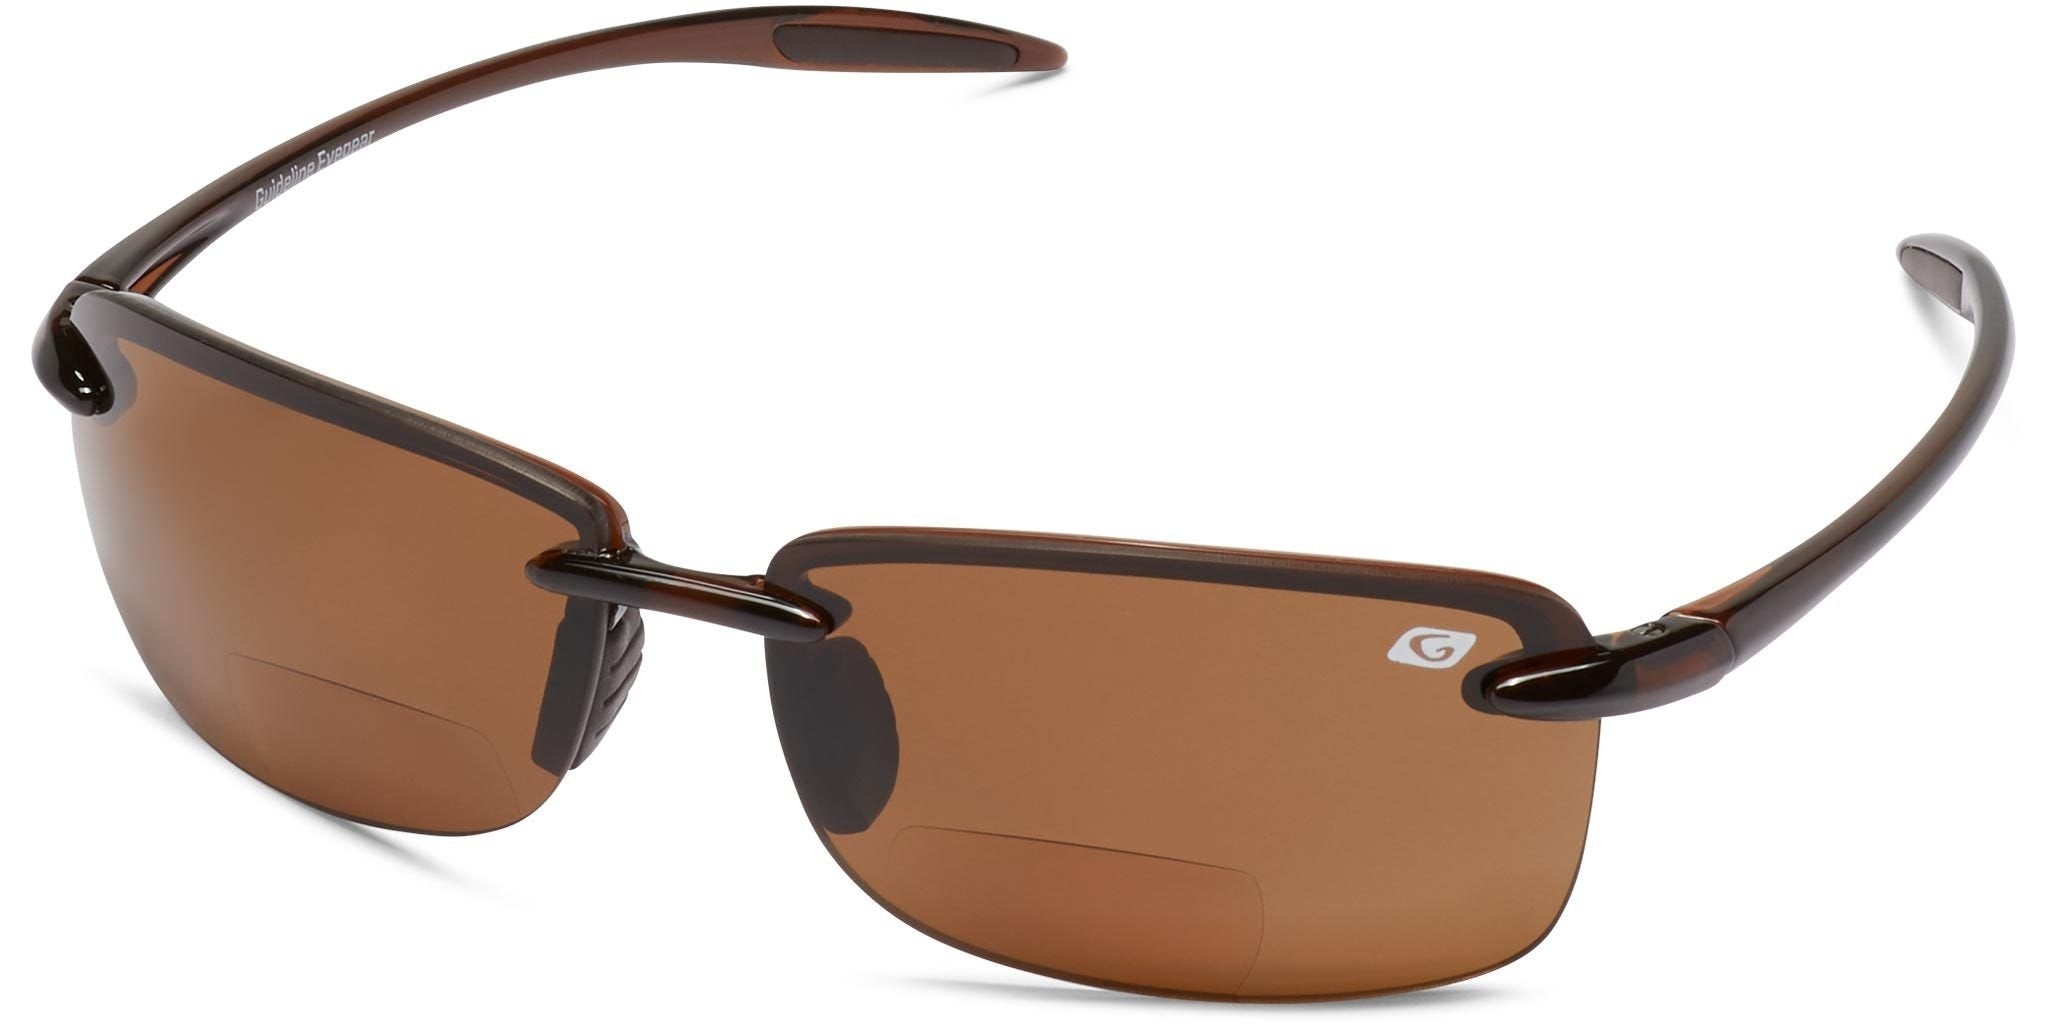 Guideline Eyegear Del Mar Polarized Bi-Focal Sunglasses - Brown +1.50